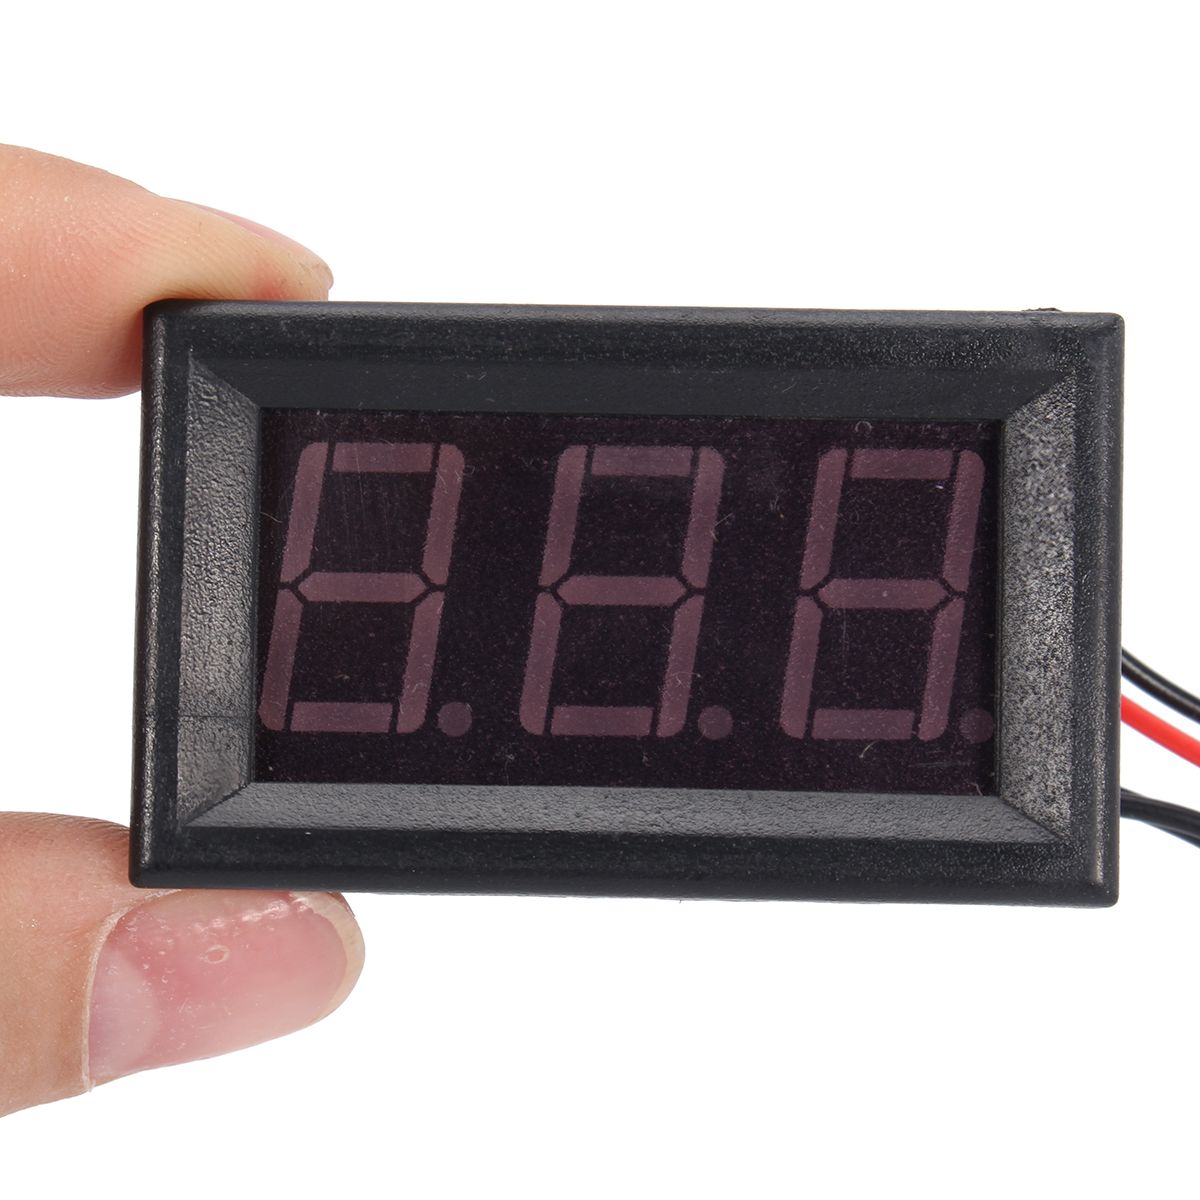 12V-Red-Digital-Display-Thermometer-LED-Waterproof-Temperature-Sensor-Test-Meter-1200053